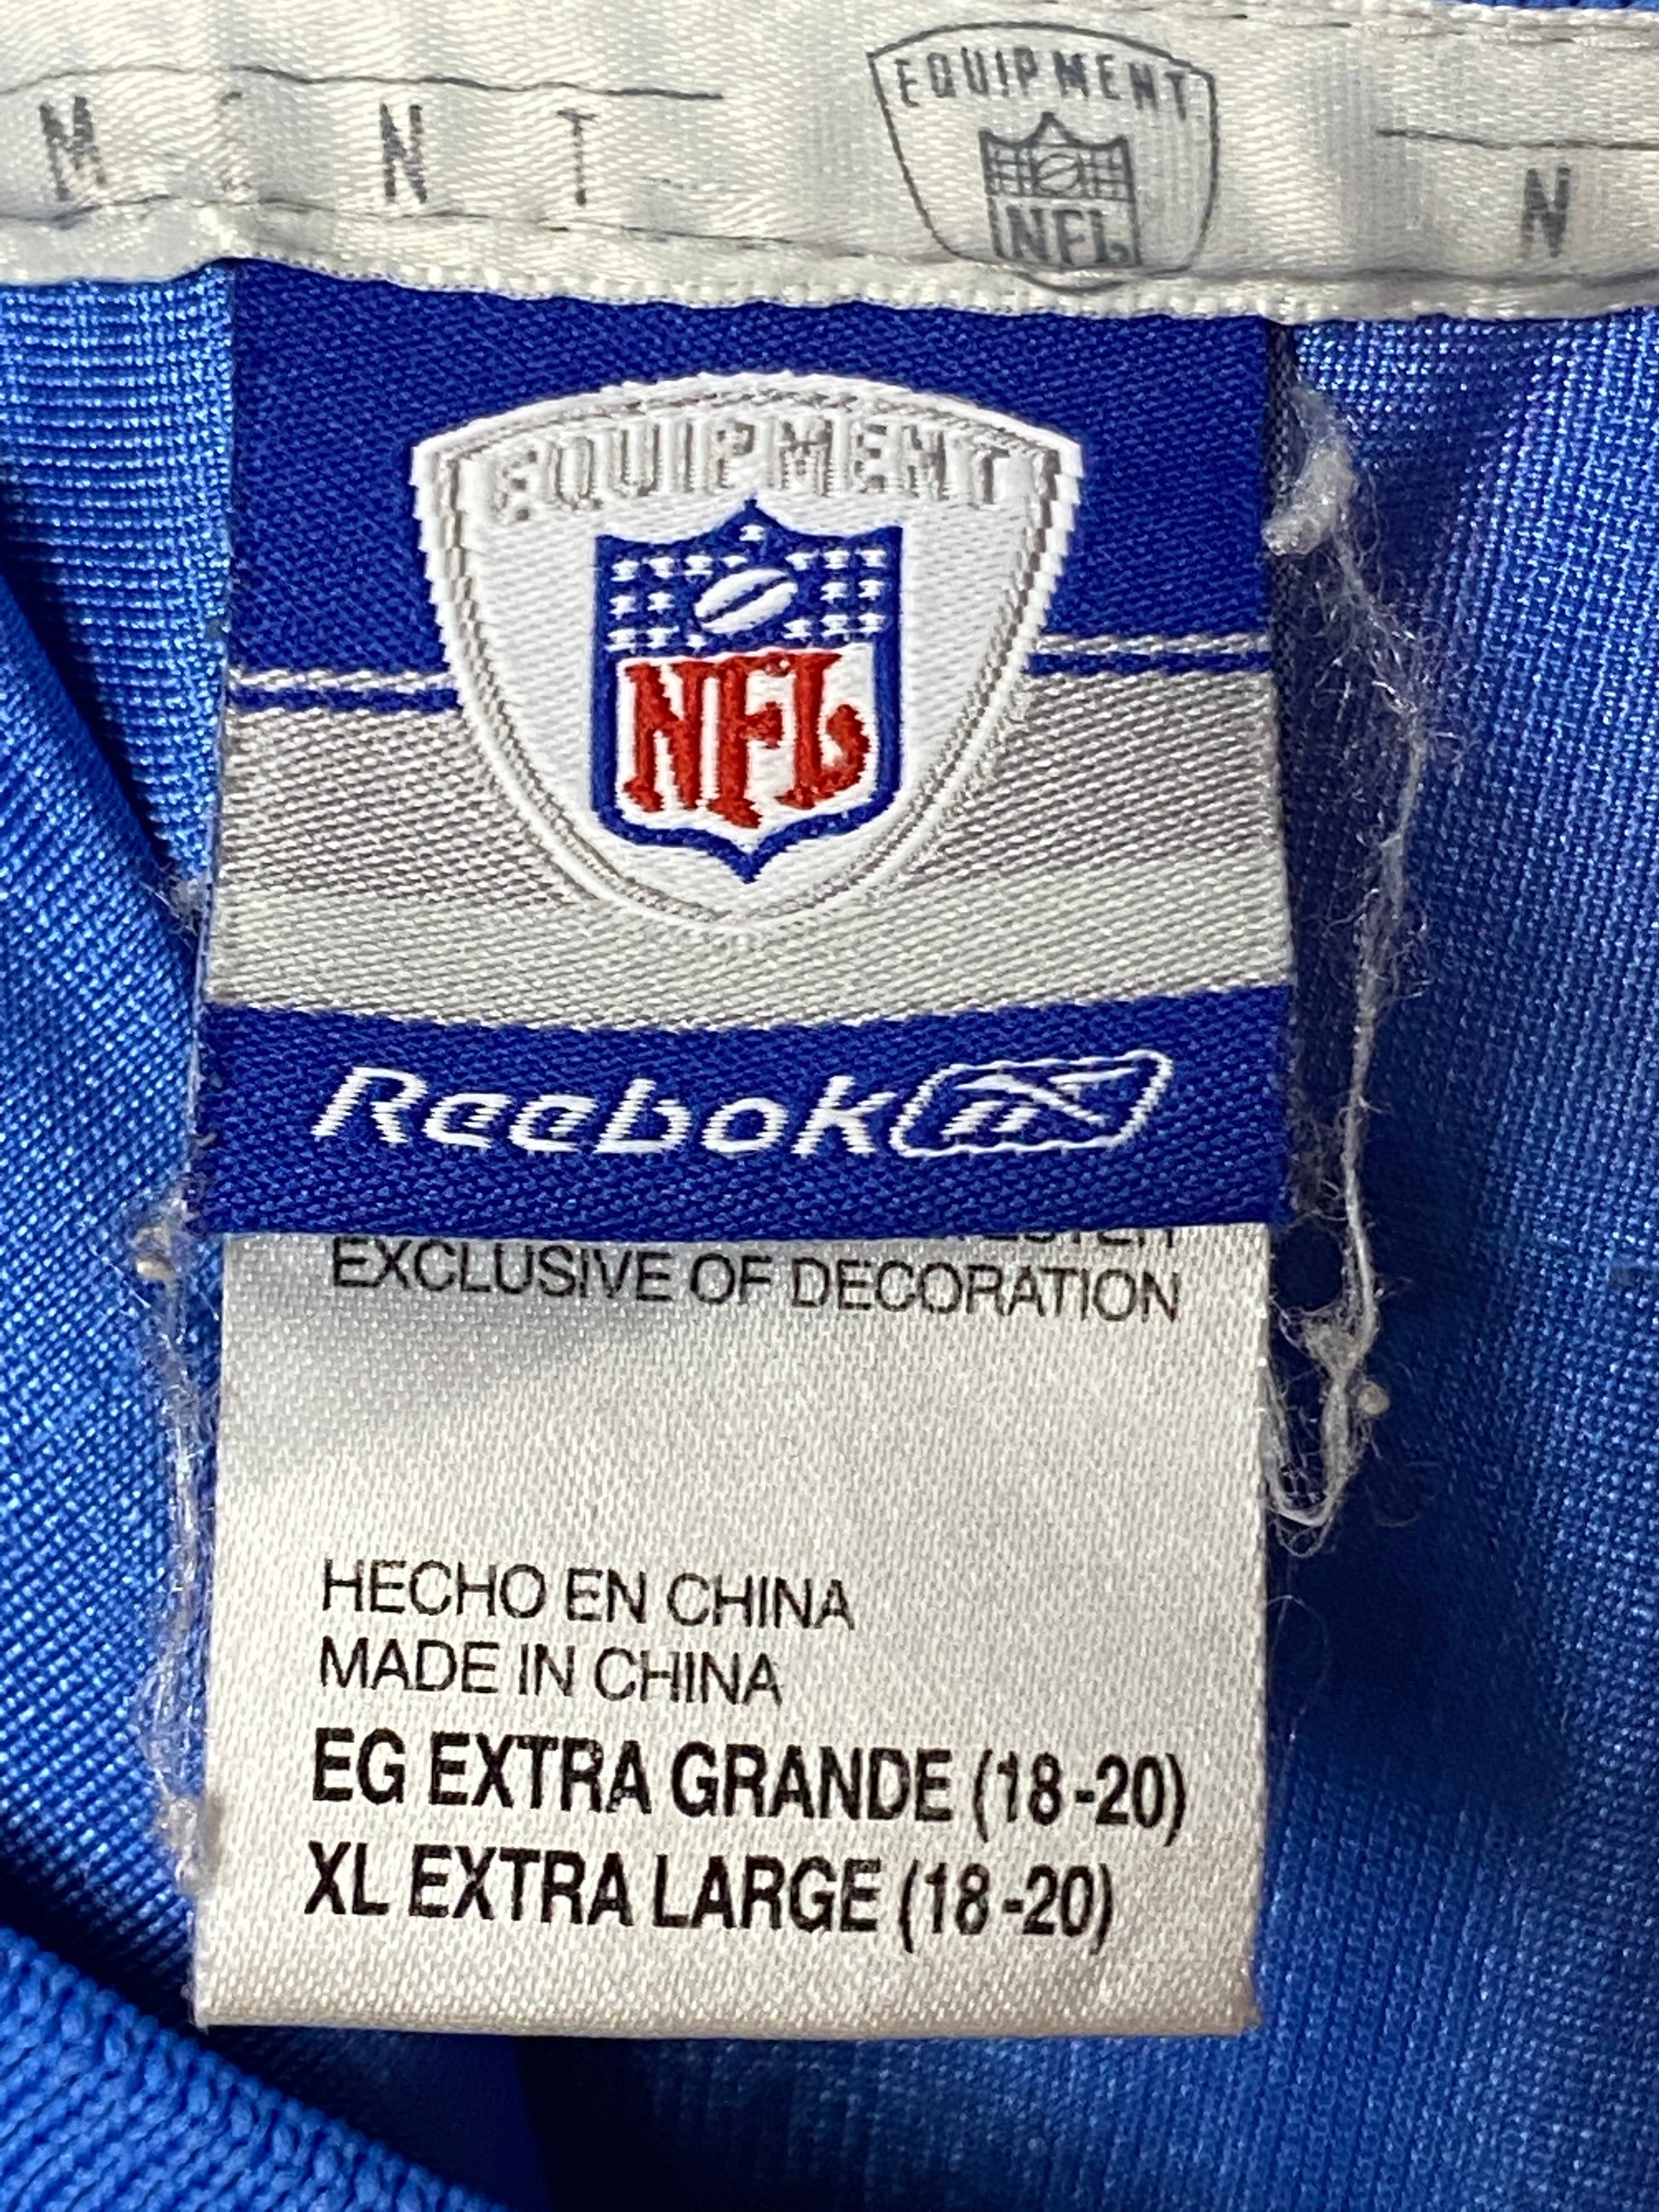 Shawne Merriman Reebok NFL Youth T-Shirt - XL Blue Polyester